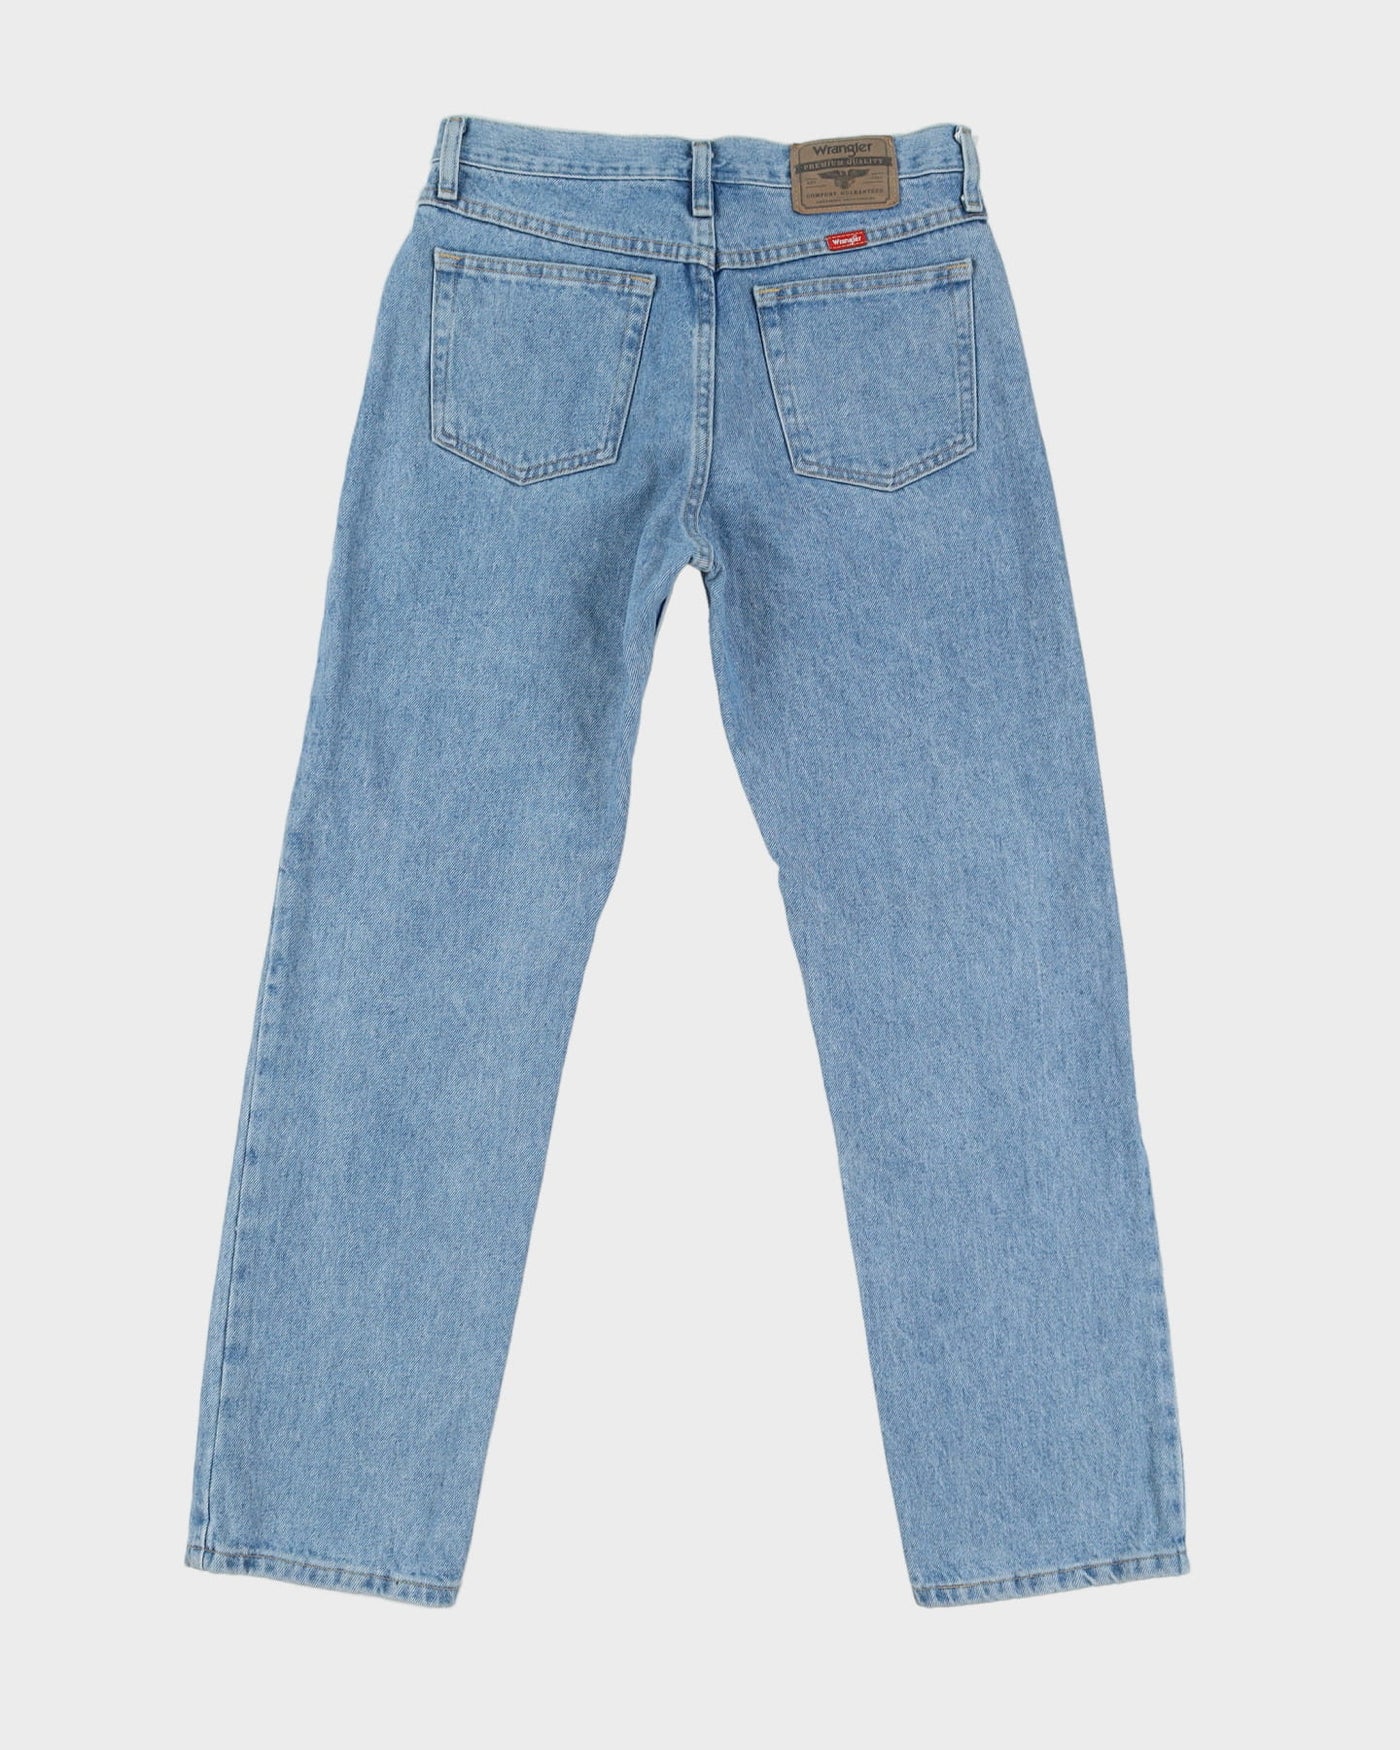 Wrangler Light Wash Blue Jeans - W30 L29